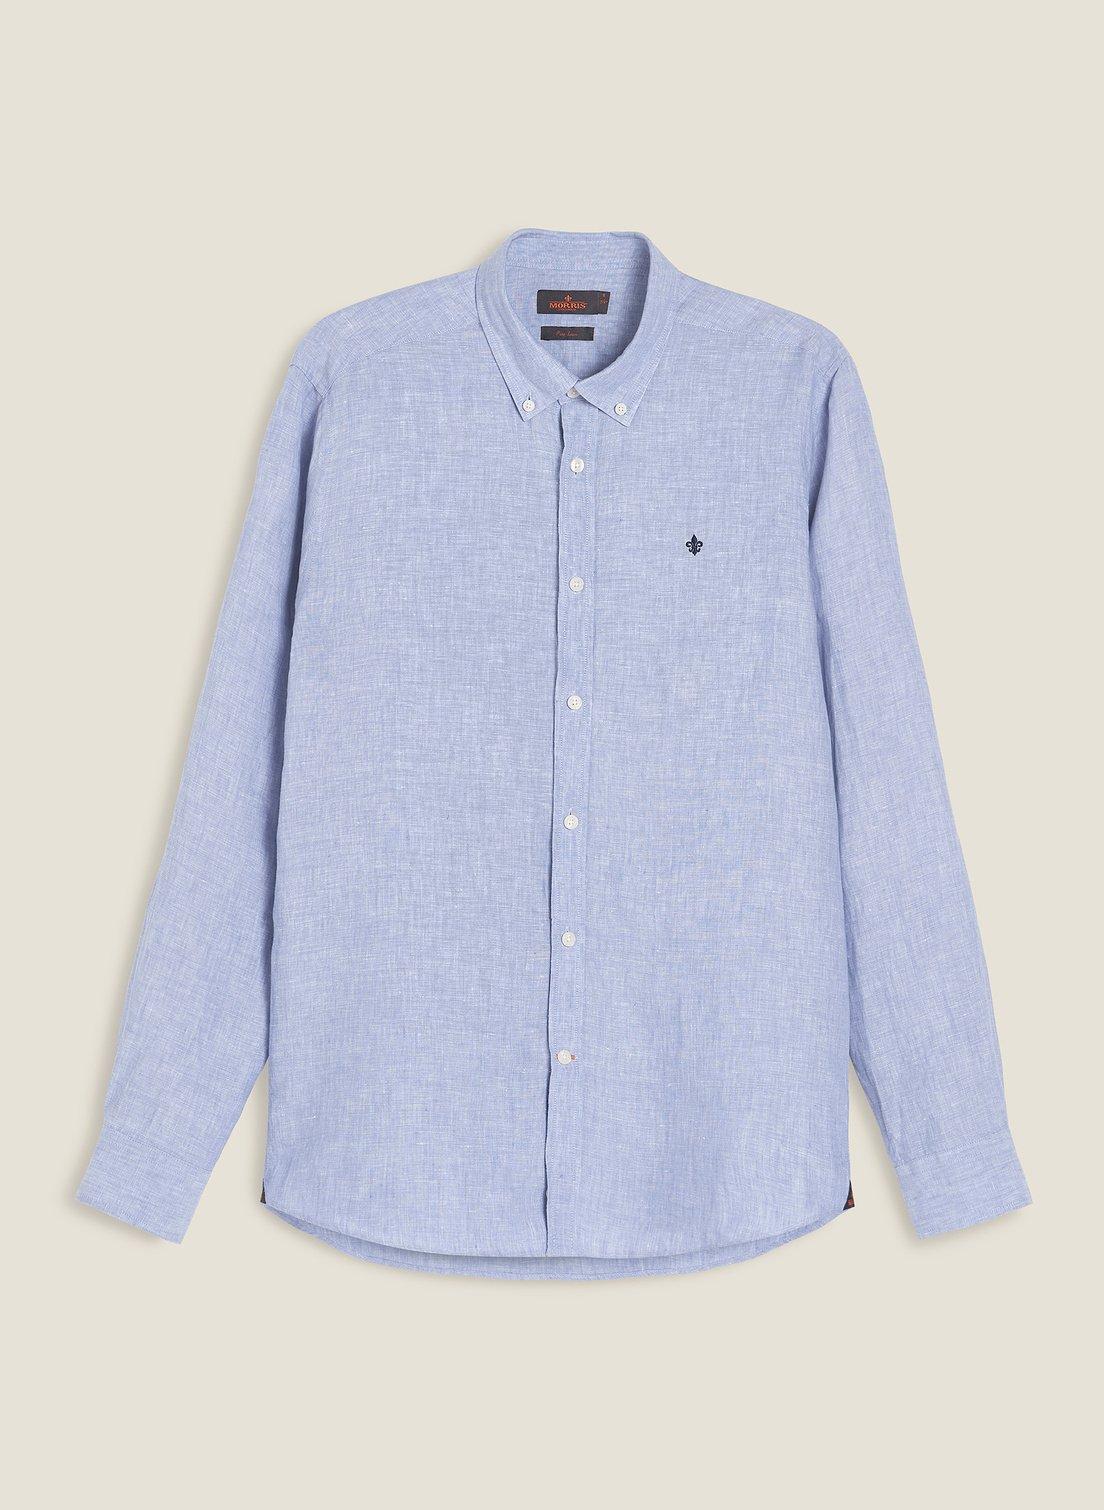 Buy Morris Stockholm Douglas Linen Shirt Blue - Scandinavian Fashion Store